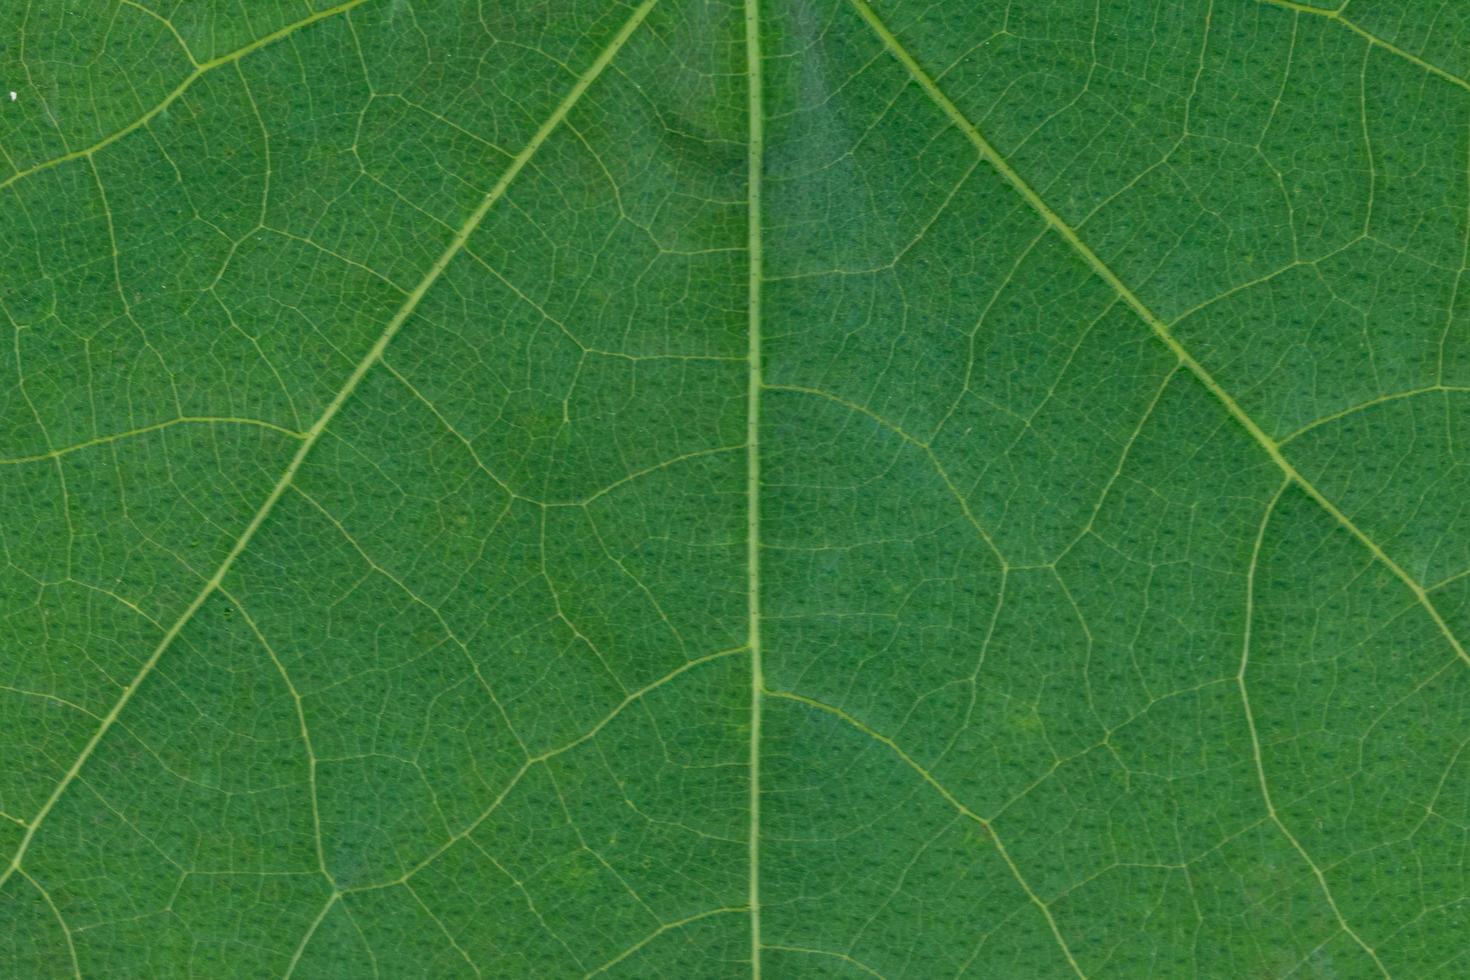 Green leaf, close-up photo